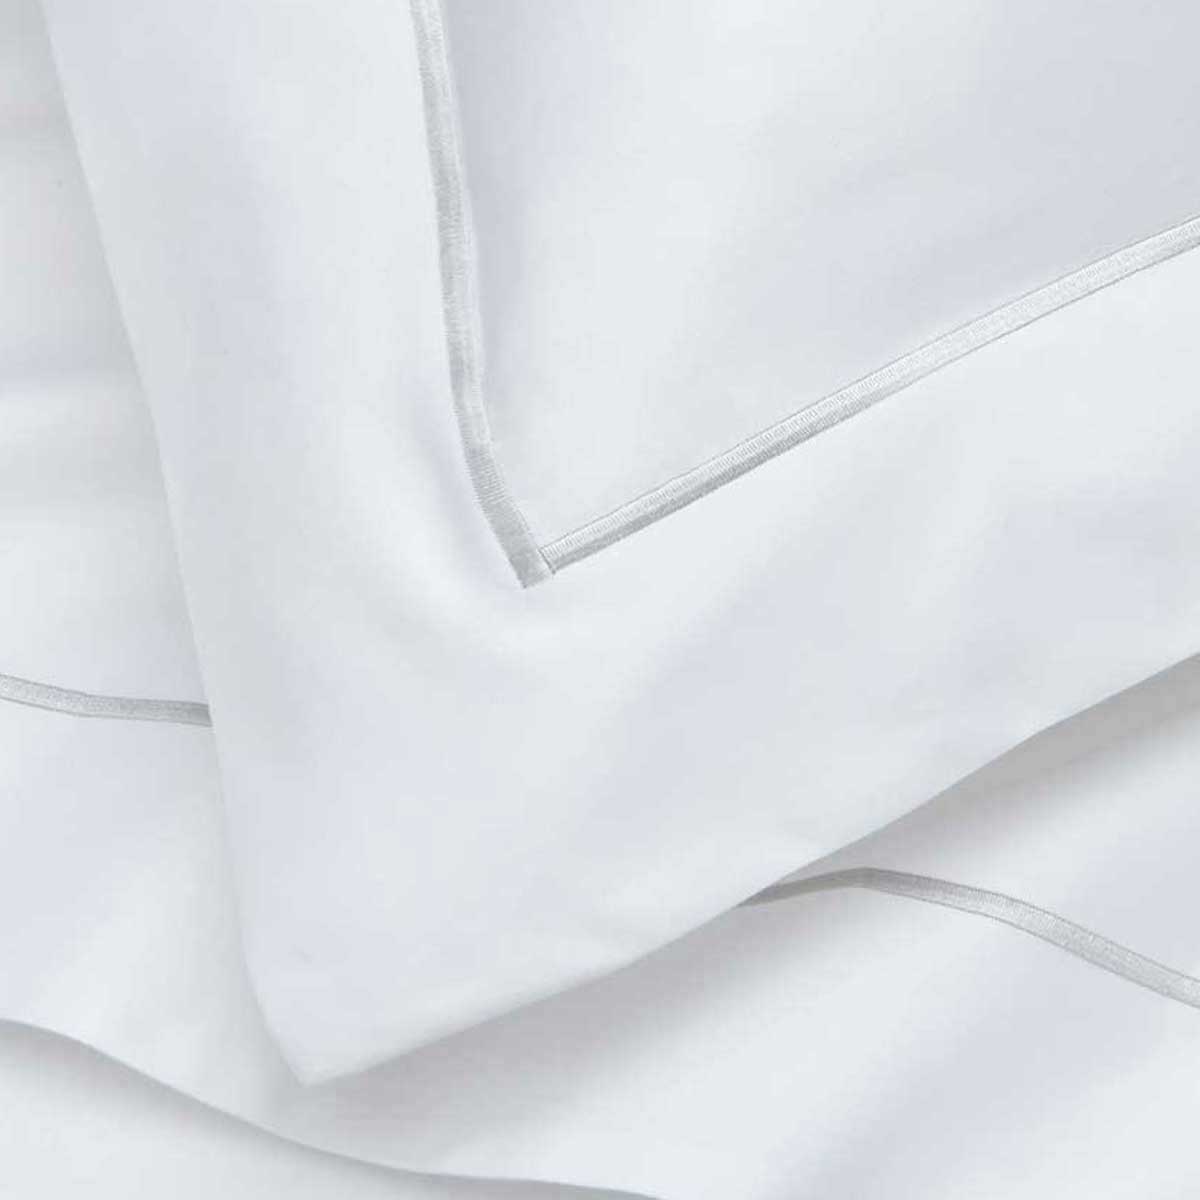 Pair of Mayfair Oxford Pillowcases - 400 TC - Egyptian Cotton - Grey - DUSK